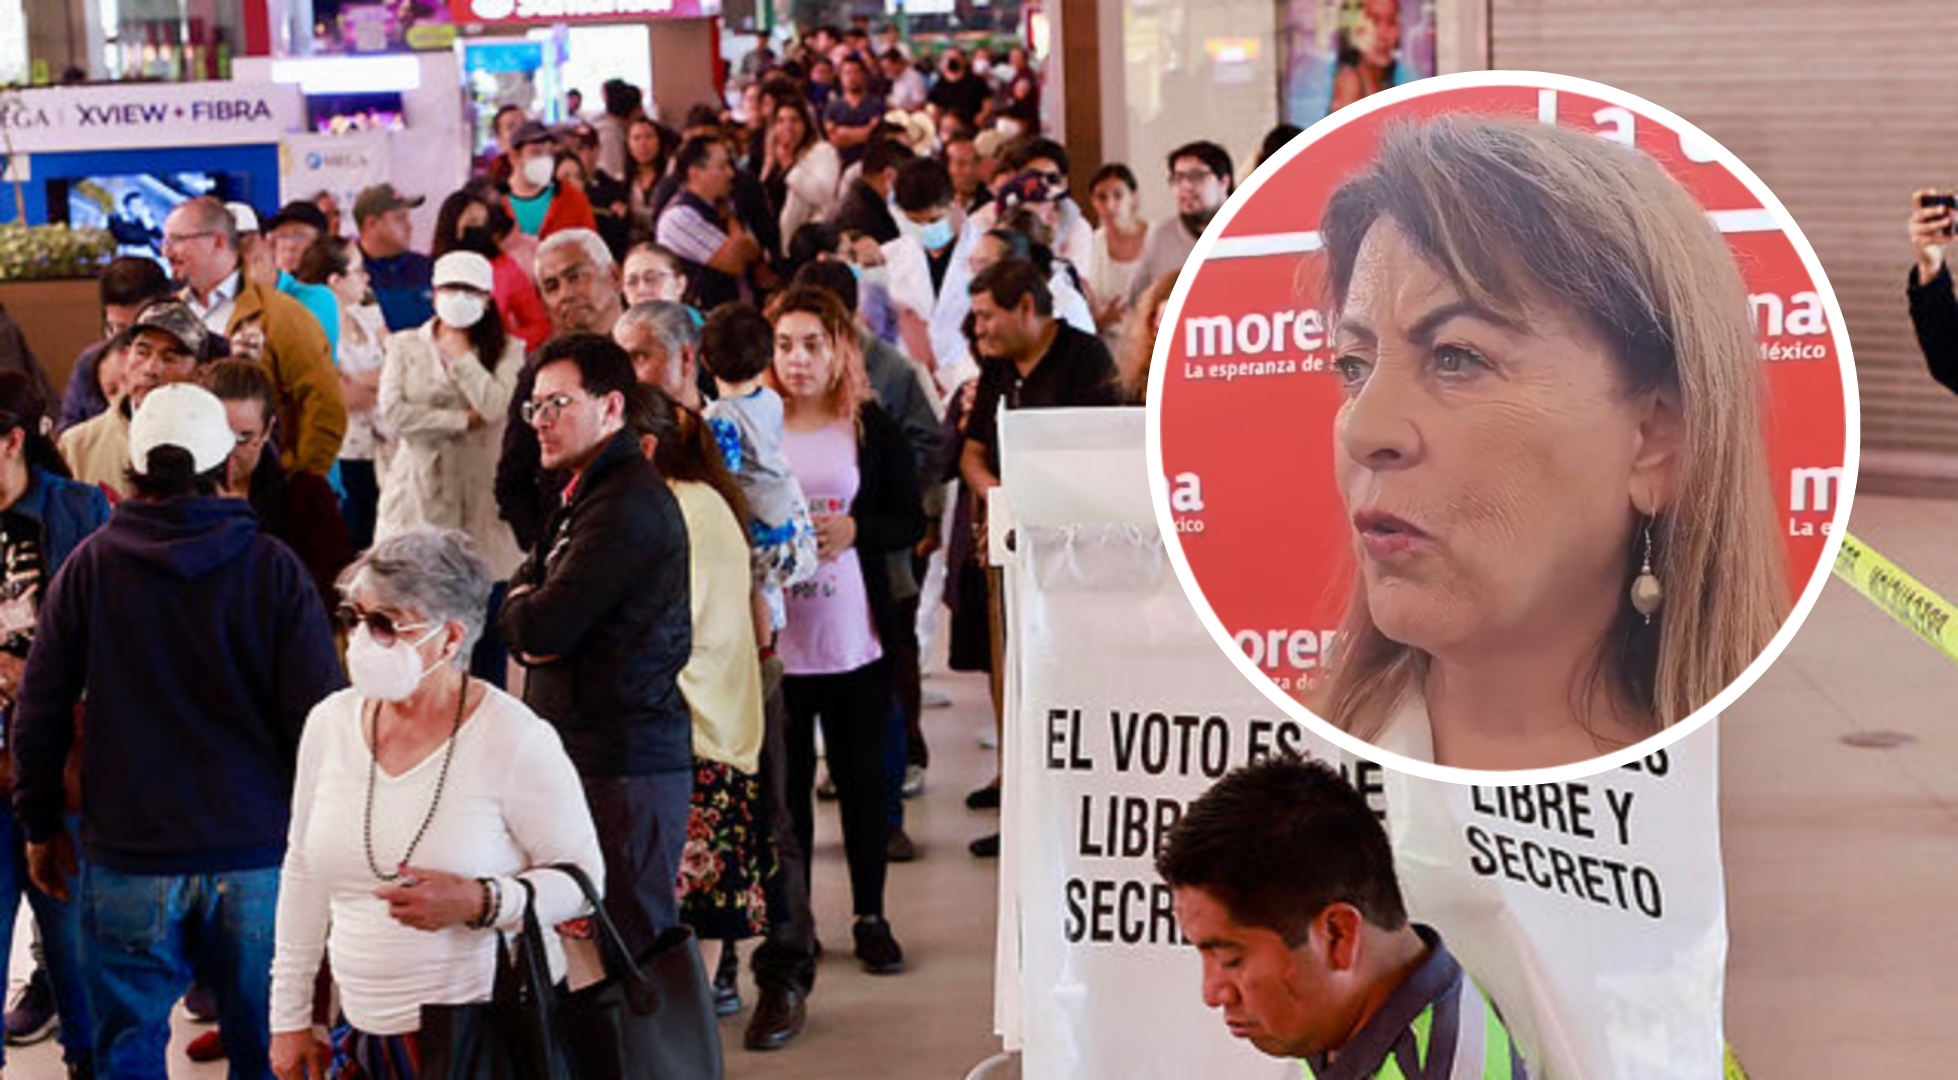 VOTACIONES ESTARÁN BLINDADAS: MARGARITA GONZÁLEZ SARAVIA